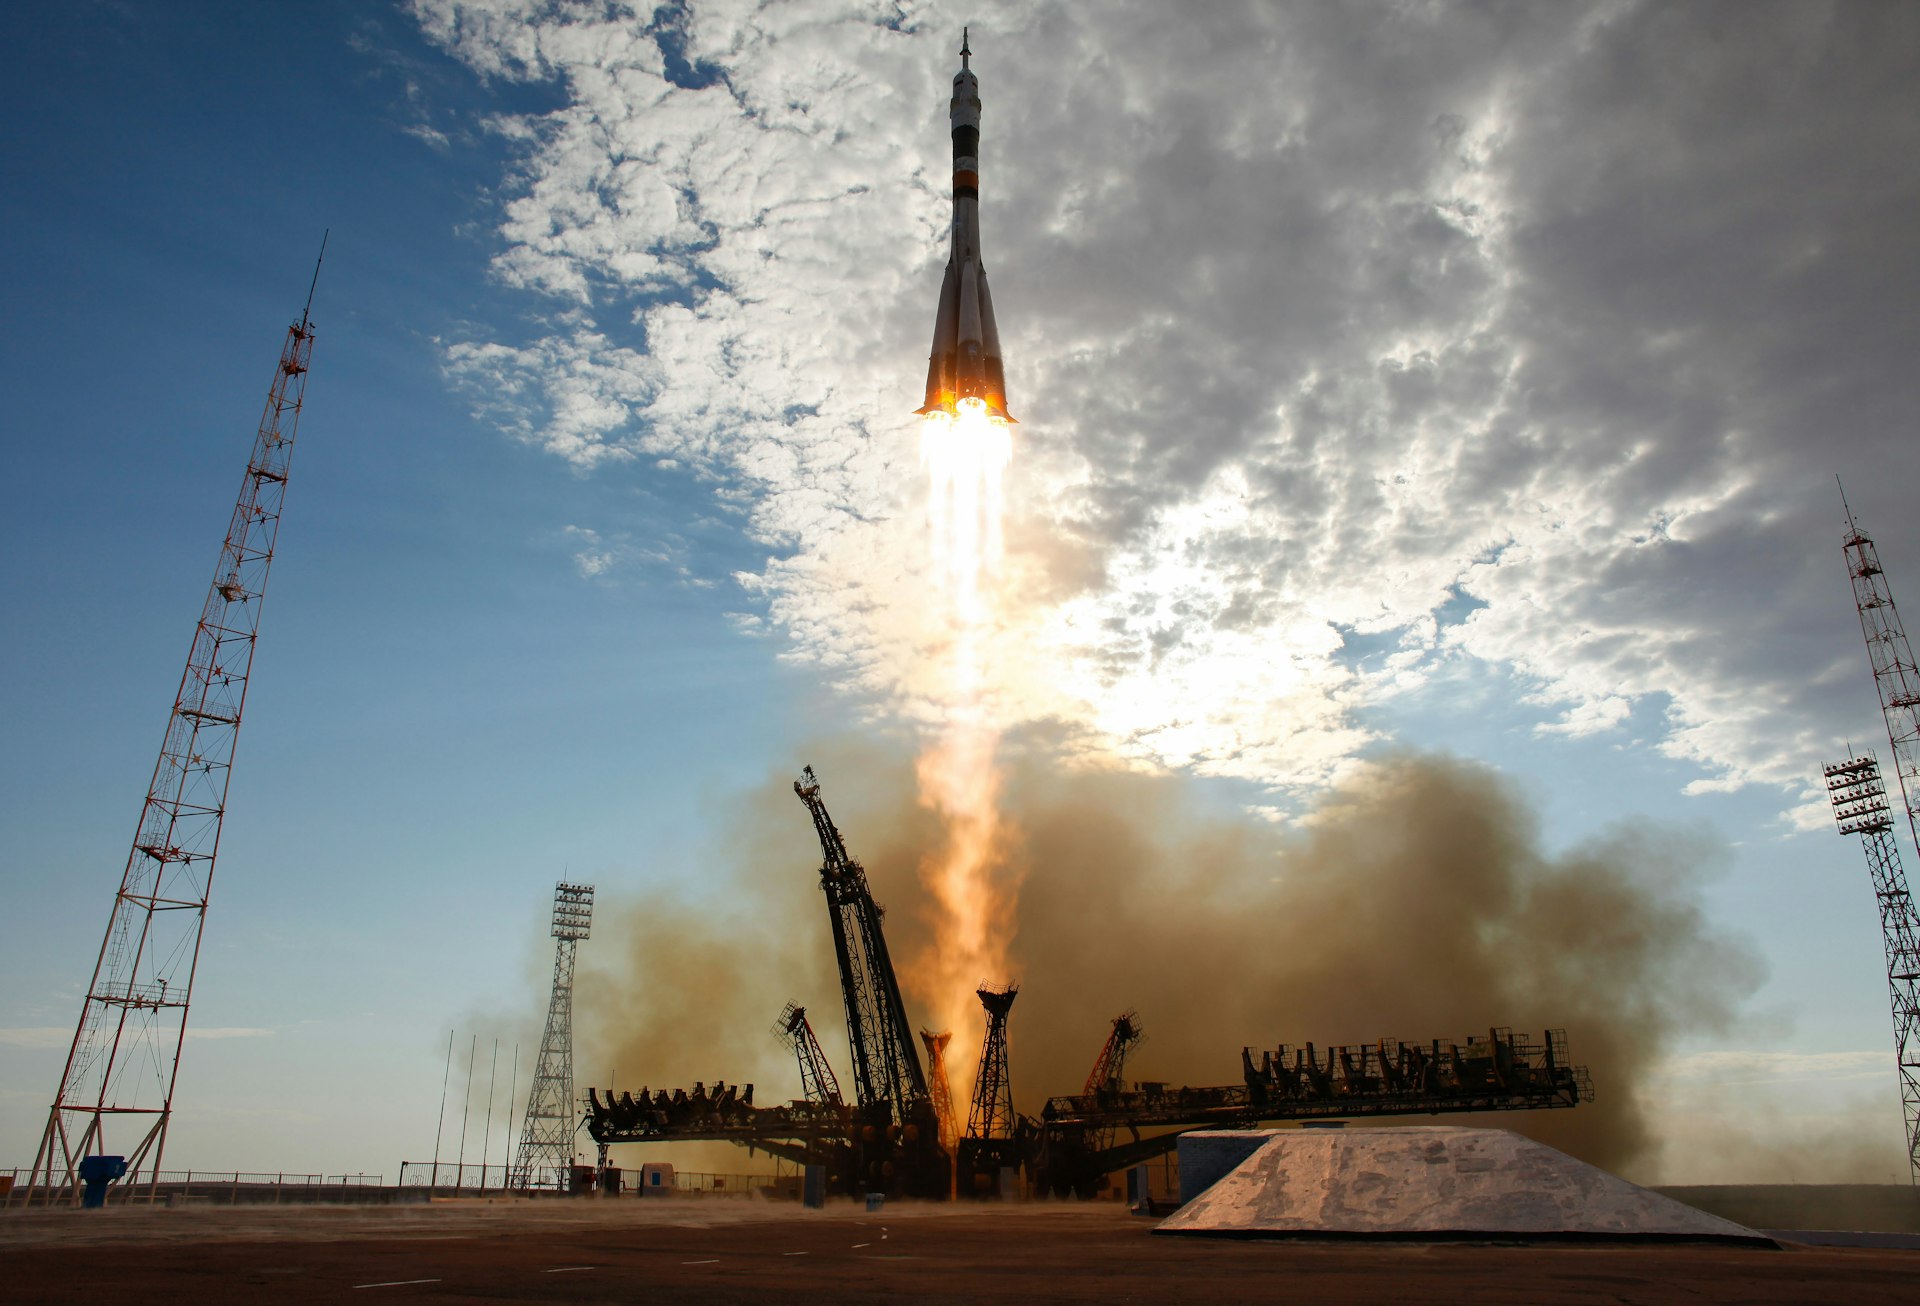 The Soyuz TMA-05M rocket launches from the Baikonur Cosmodrome, Kazakhstan